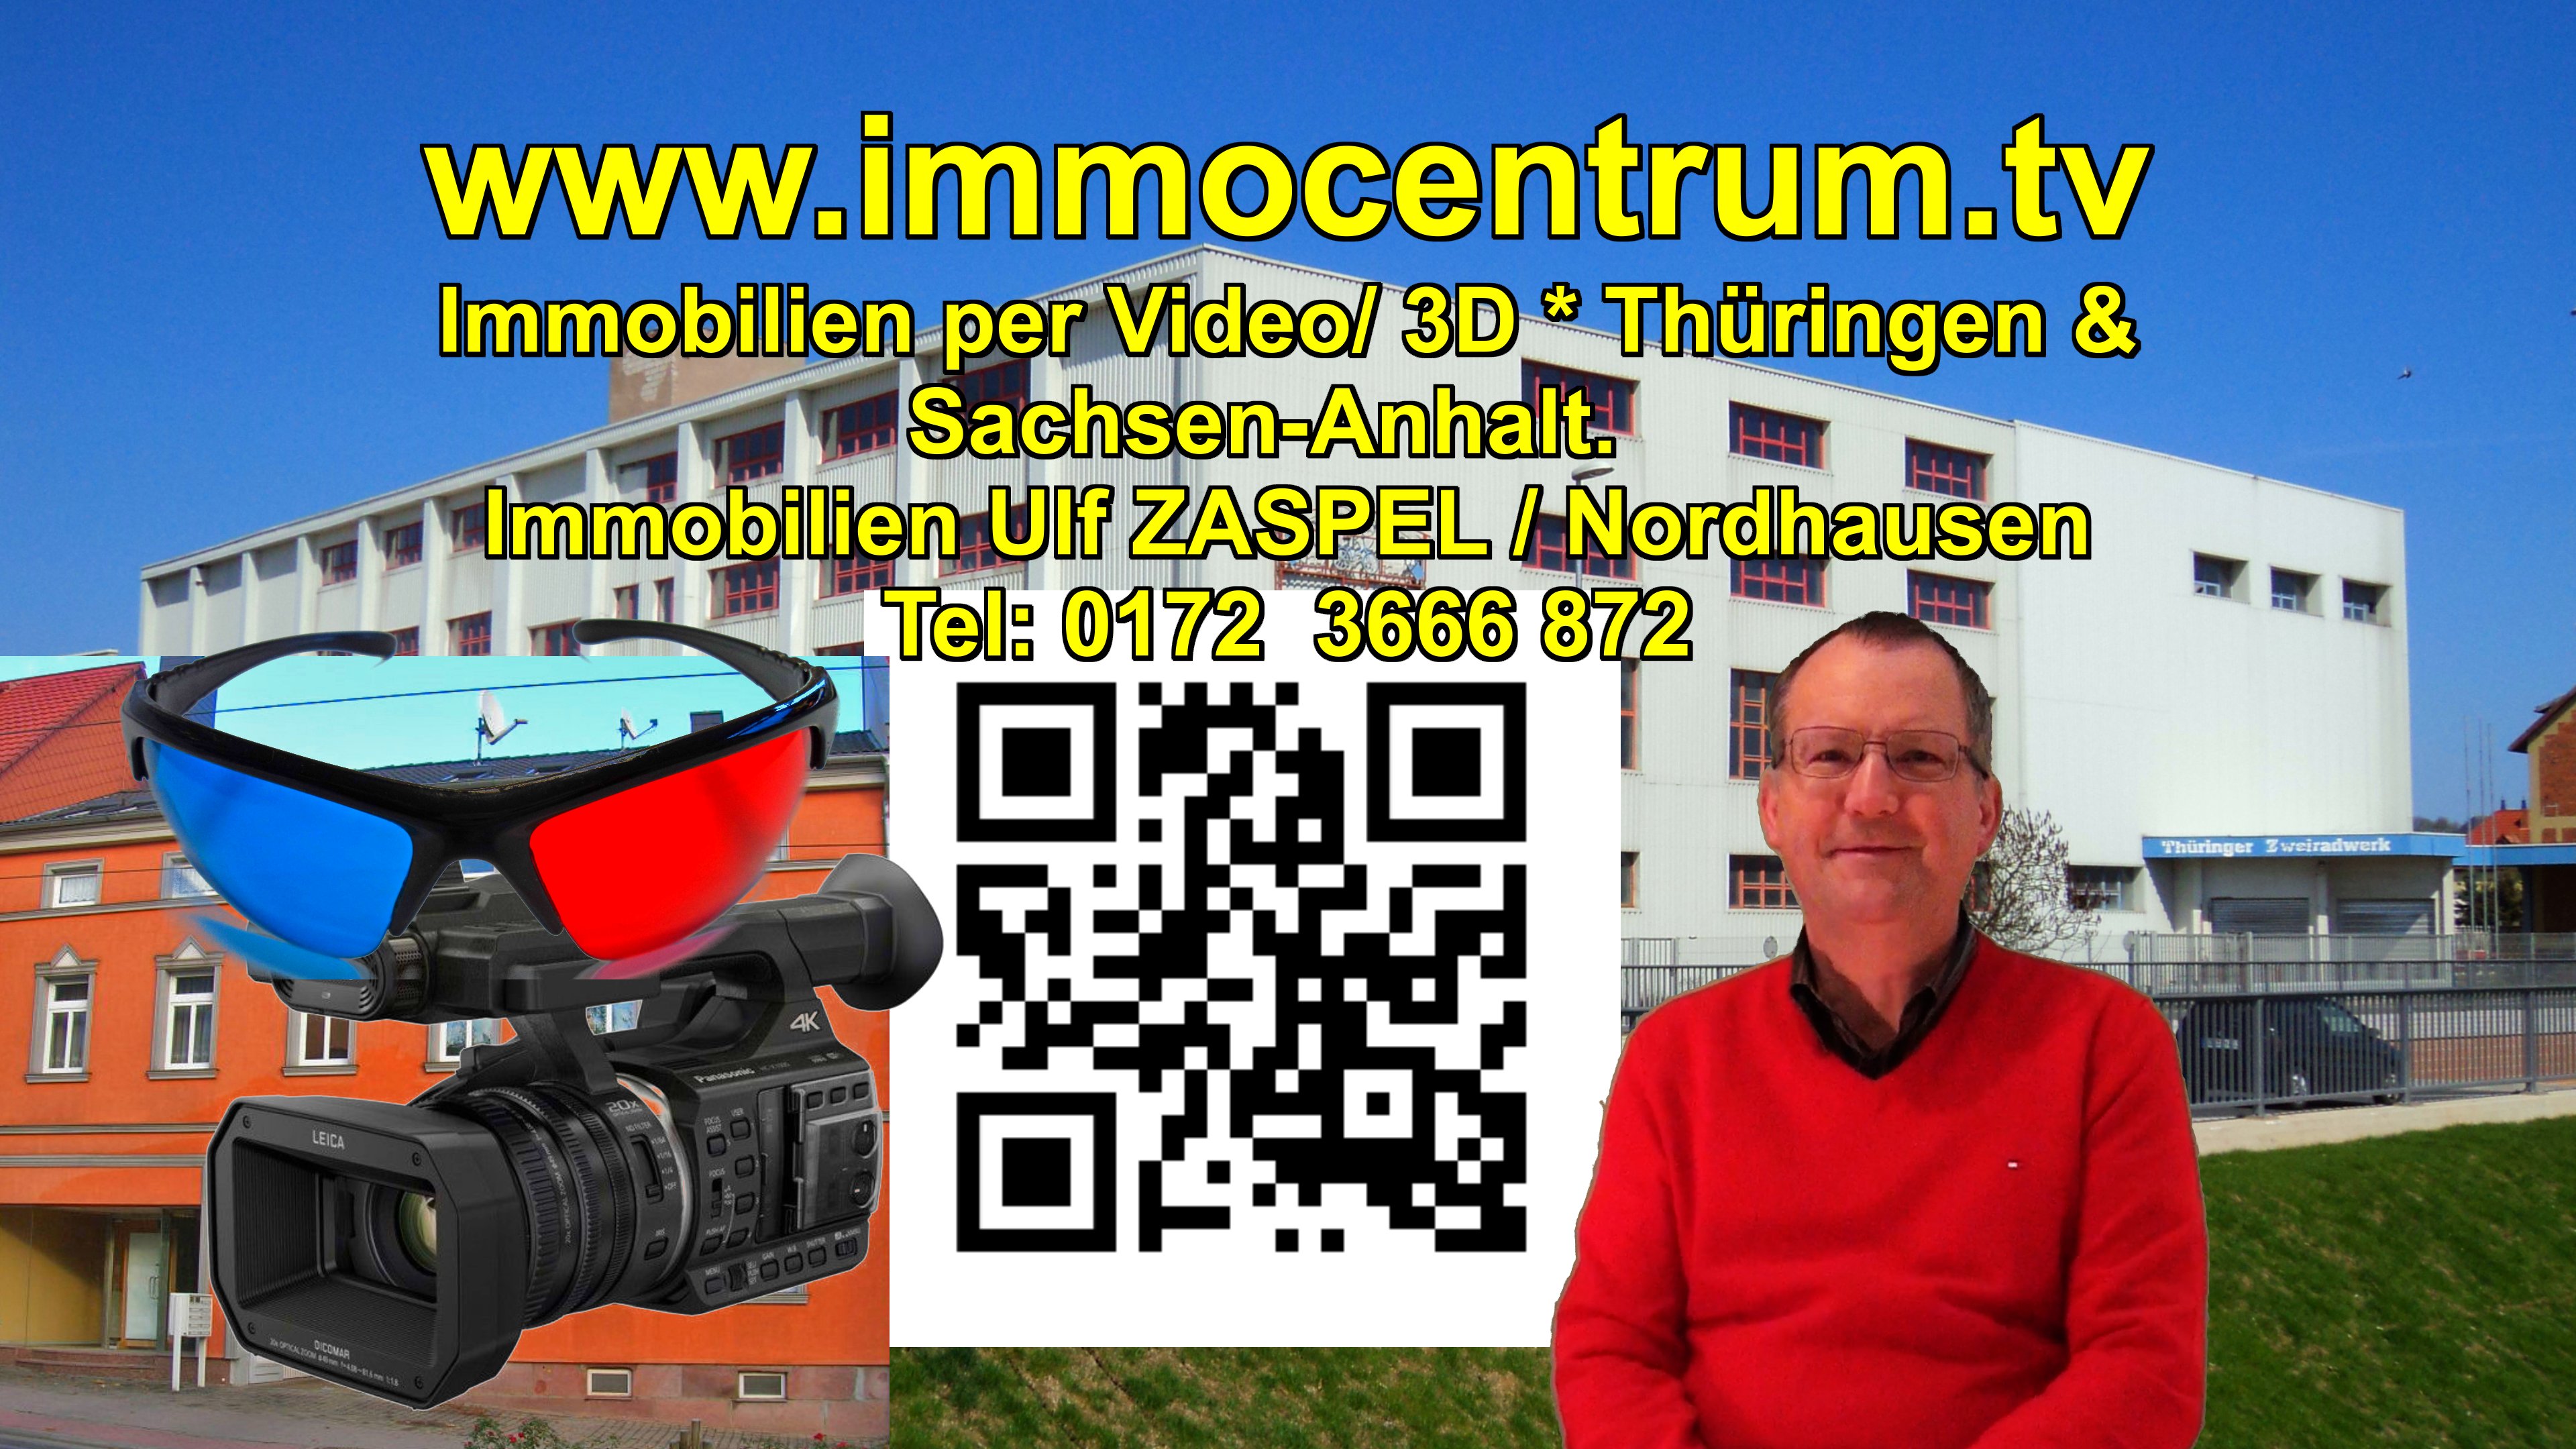 Immobilienmakler / Immobilienkaufmann Ulf Reiner Zaspel in Nordhausen/ Harz - Thüringen * Immobilien per Video & 3D